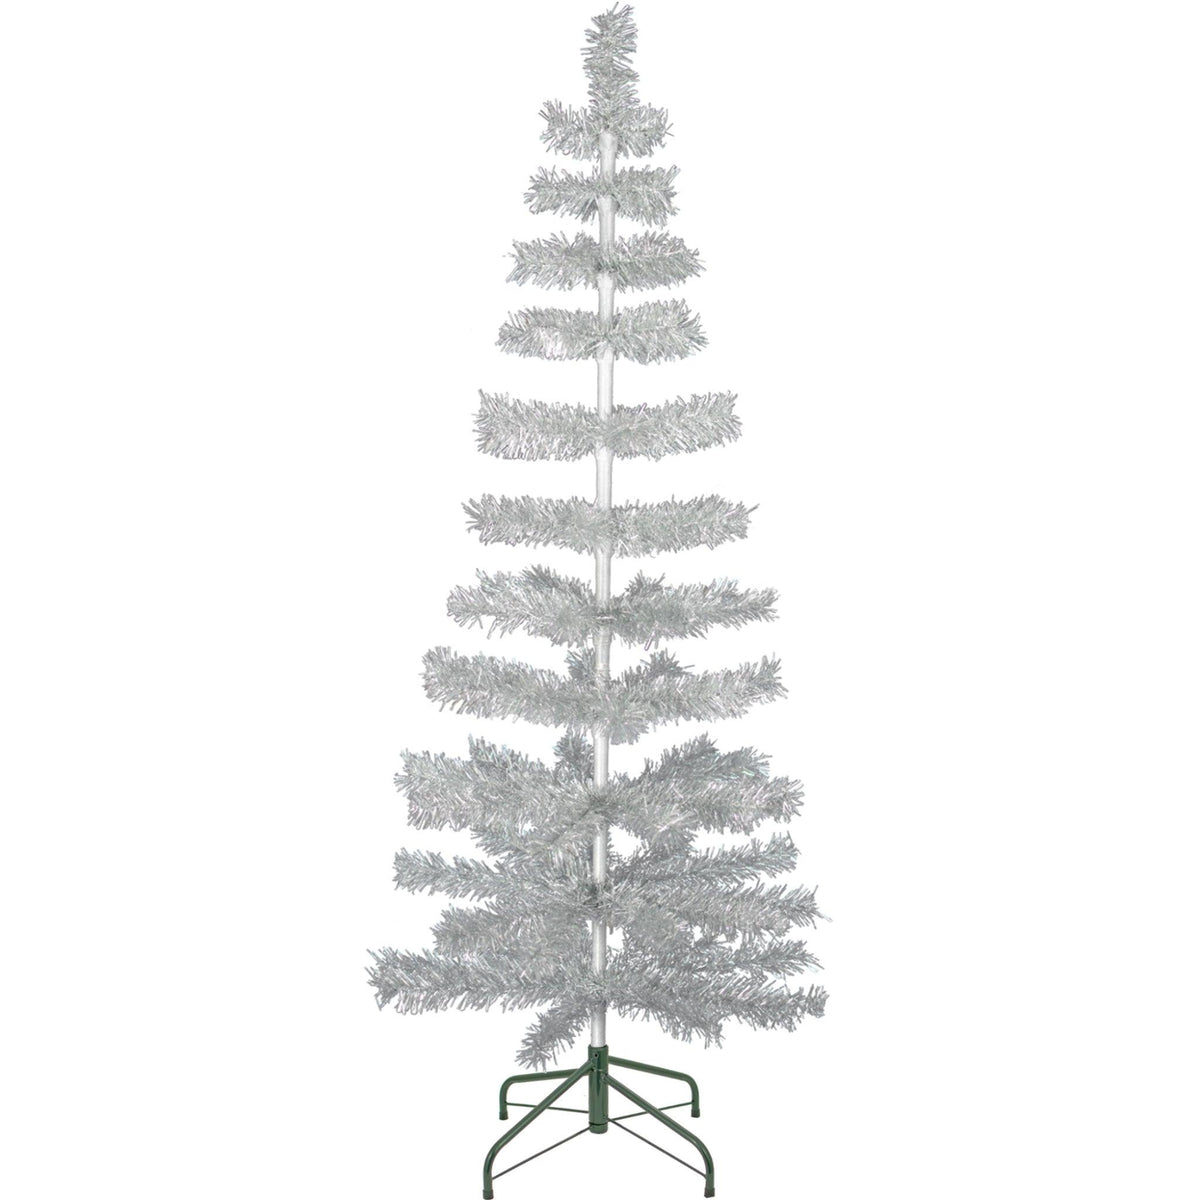 Lee Display's 5FT Tall Silver Tinsel Christmas Tree is on sale at leedisplay.com